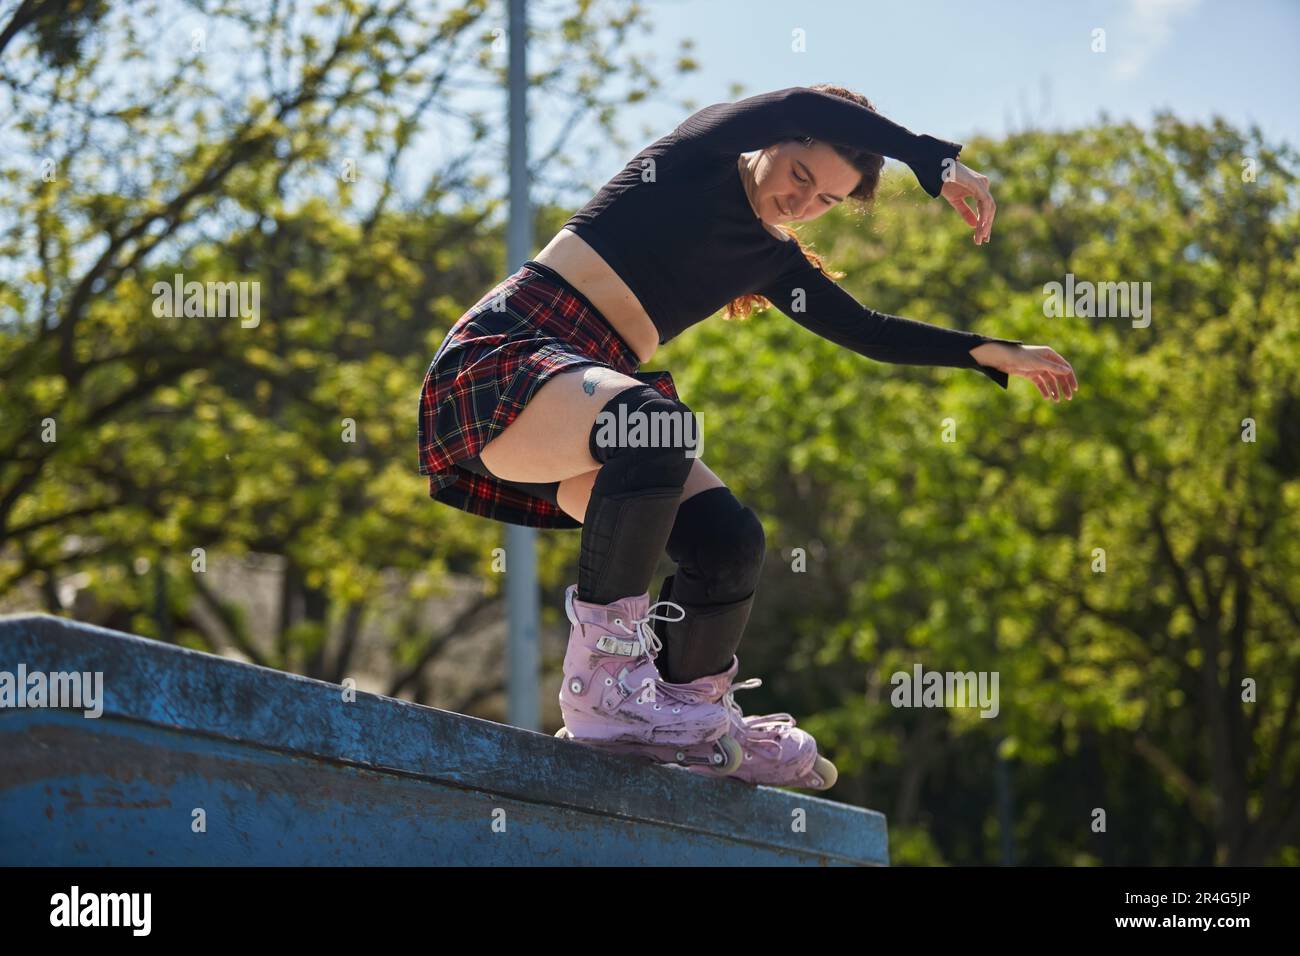 https://c8.alamy.com/comp/2R4G5JP/roller-blader-female-grinding-on-a-ledge-in-a-skatepark-cool-young-inline-skater-person-performing-a-bs-full-torque-slide-2R4G5JP.jpg